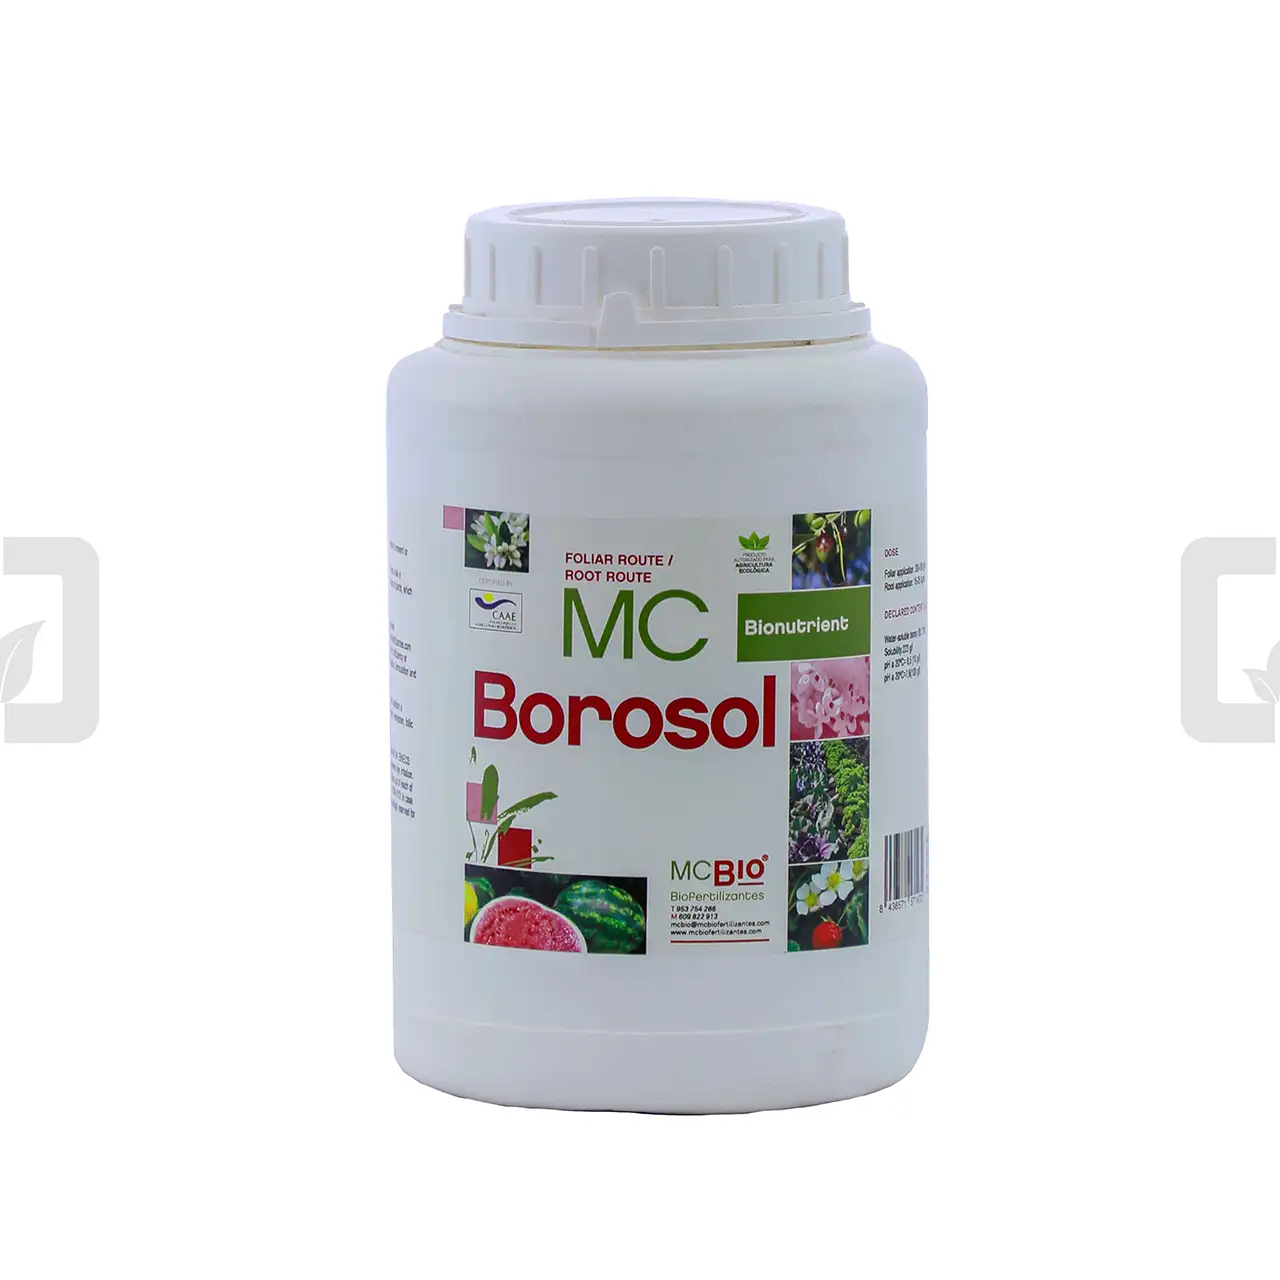 MC Borosol